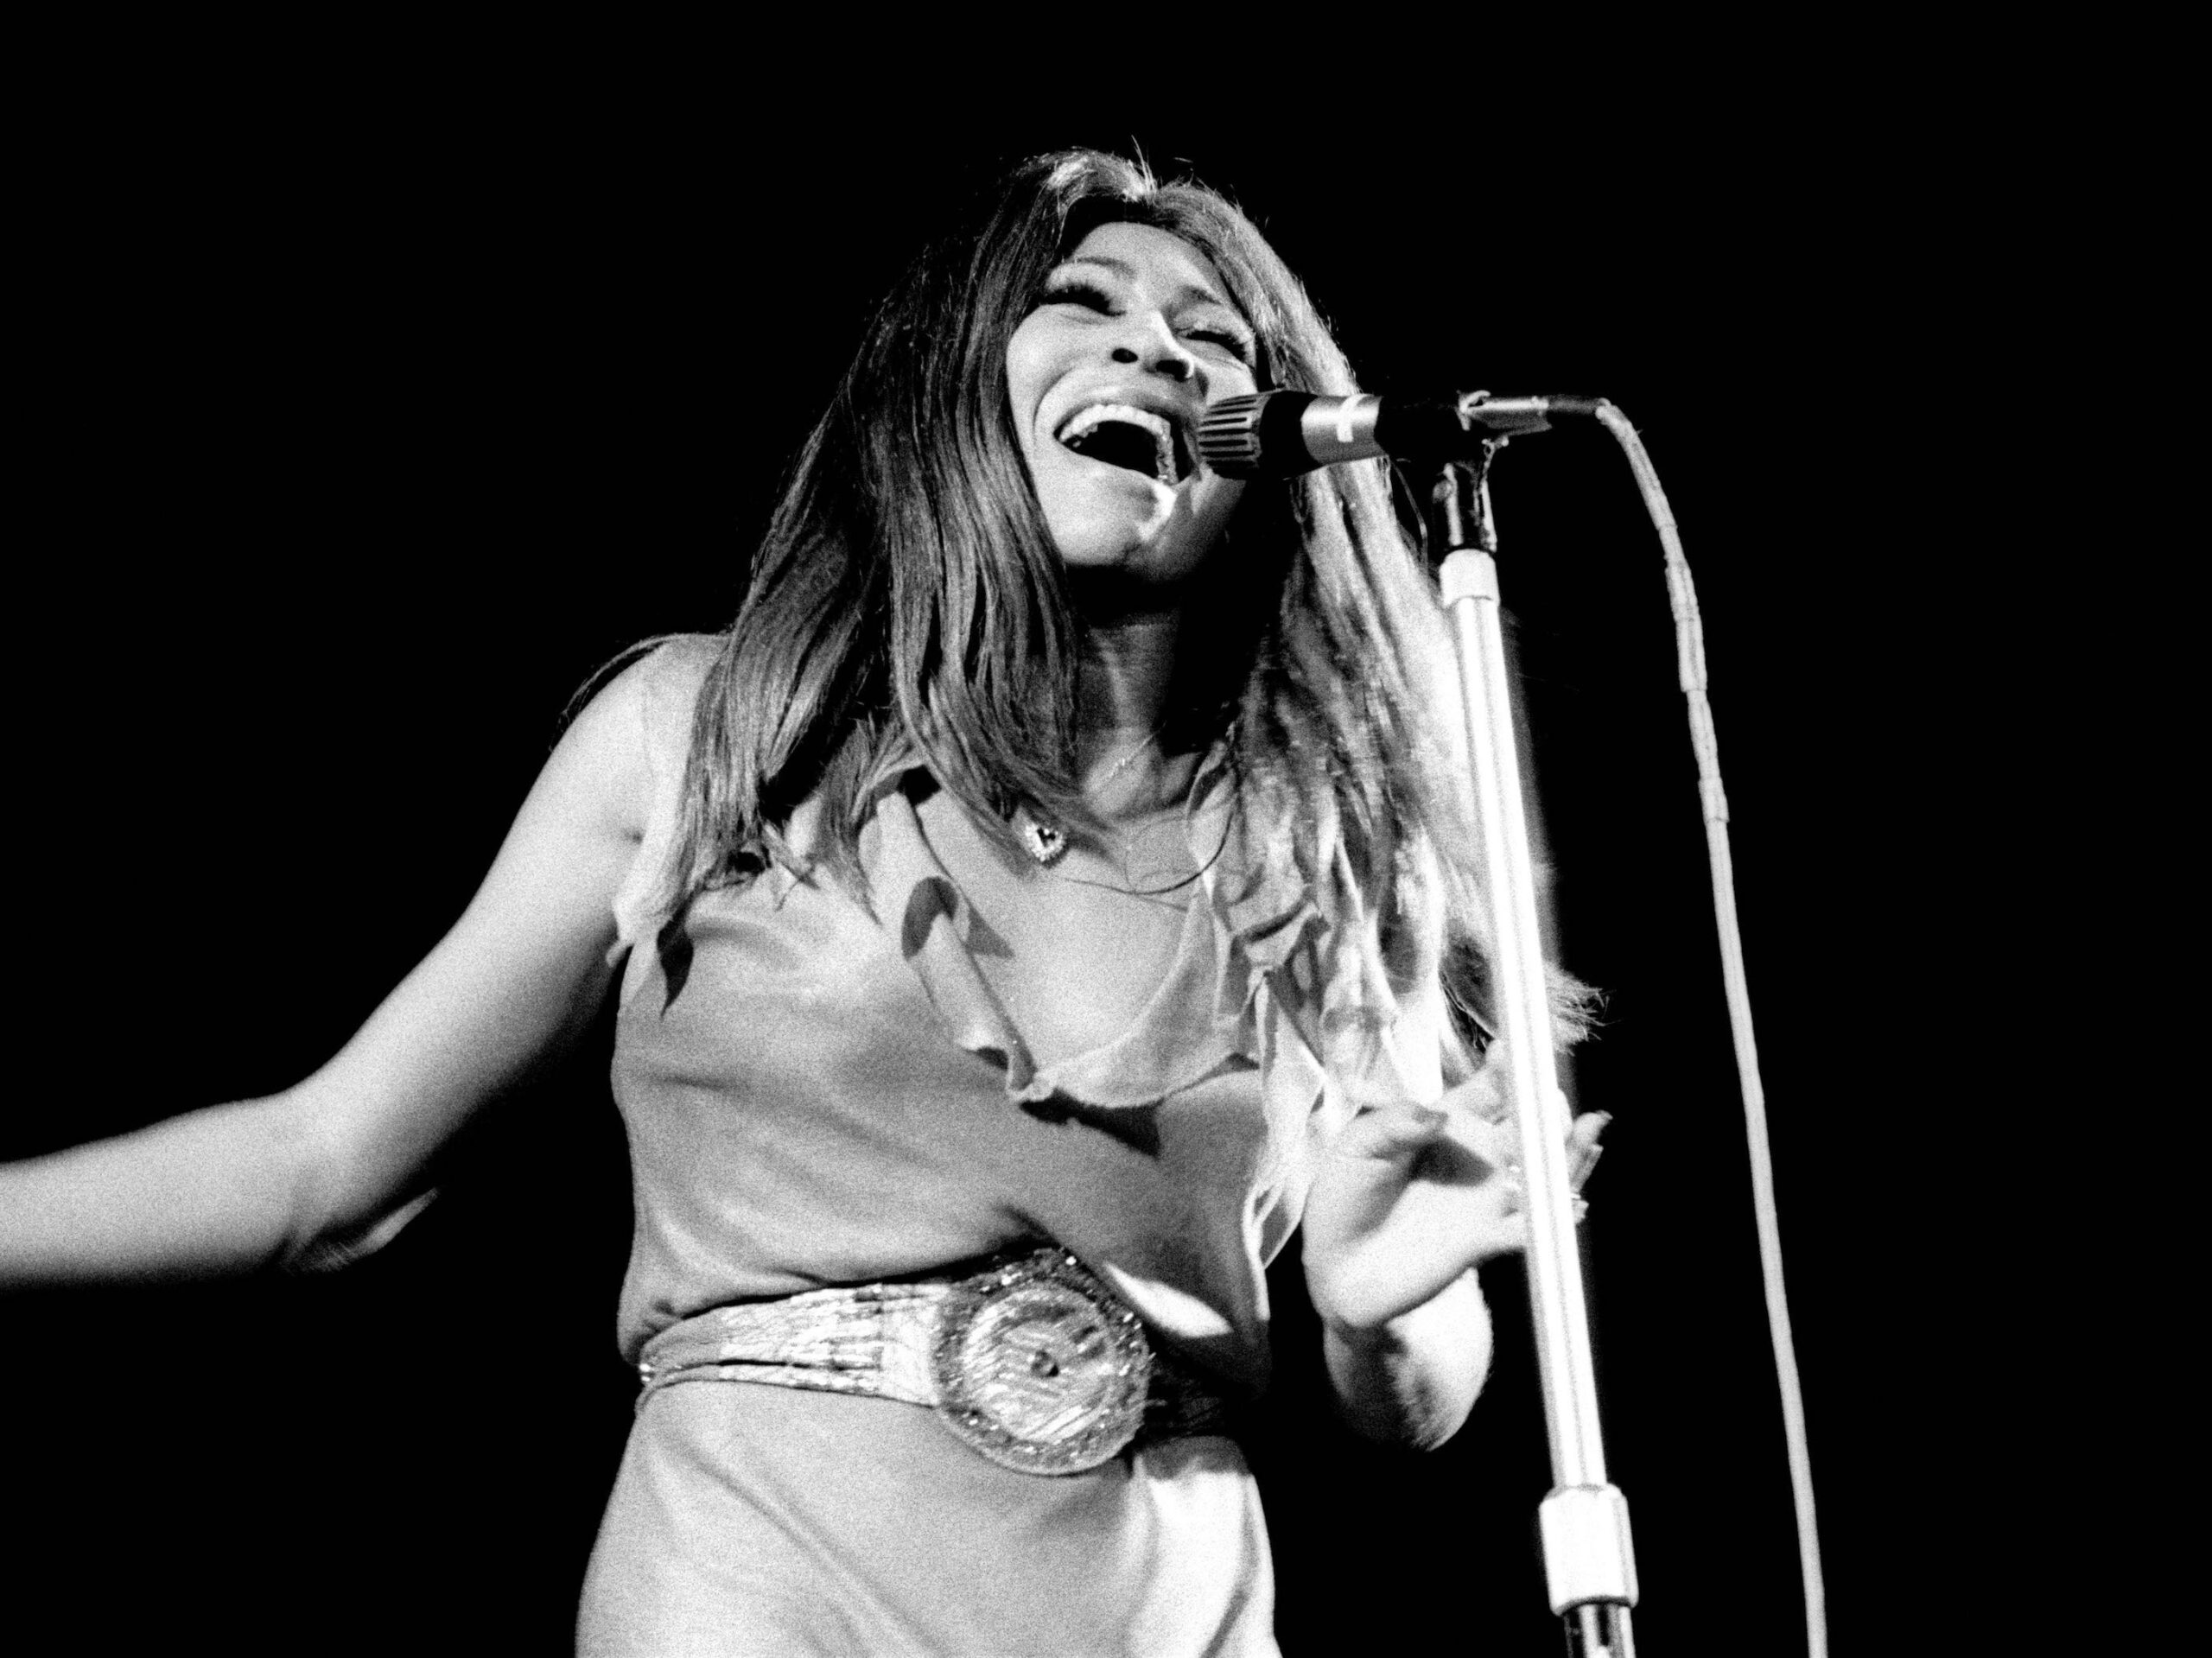 COPENHAGEN, DENMARK: Tina Turner performs on stage with Ike &amp; Tina Turner in 1972 in Copenhagen, Denmark.